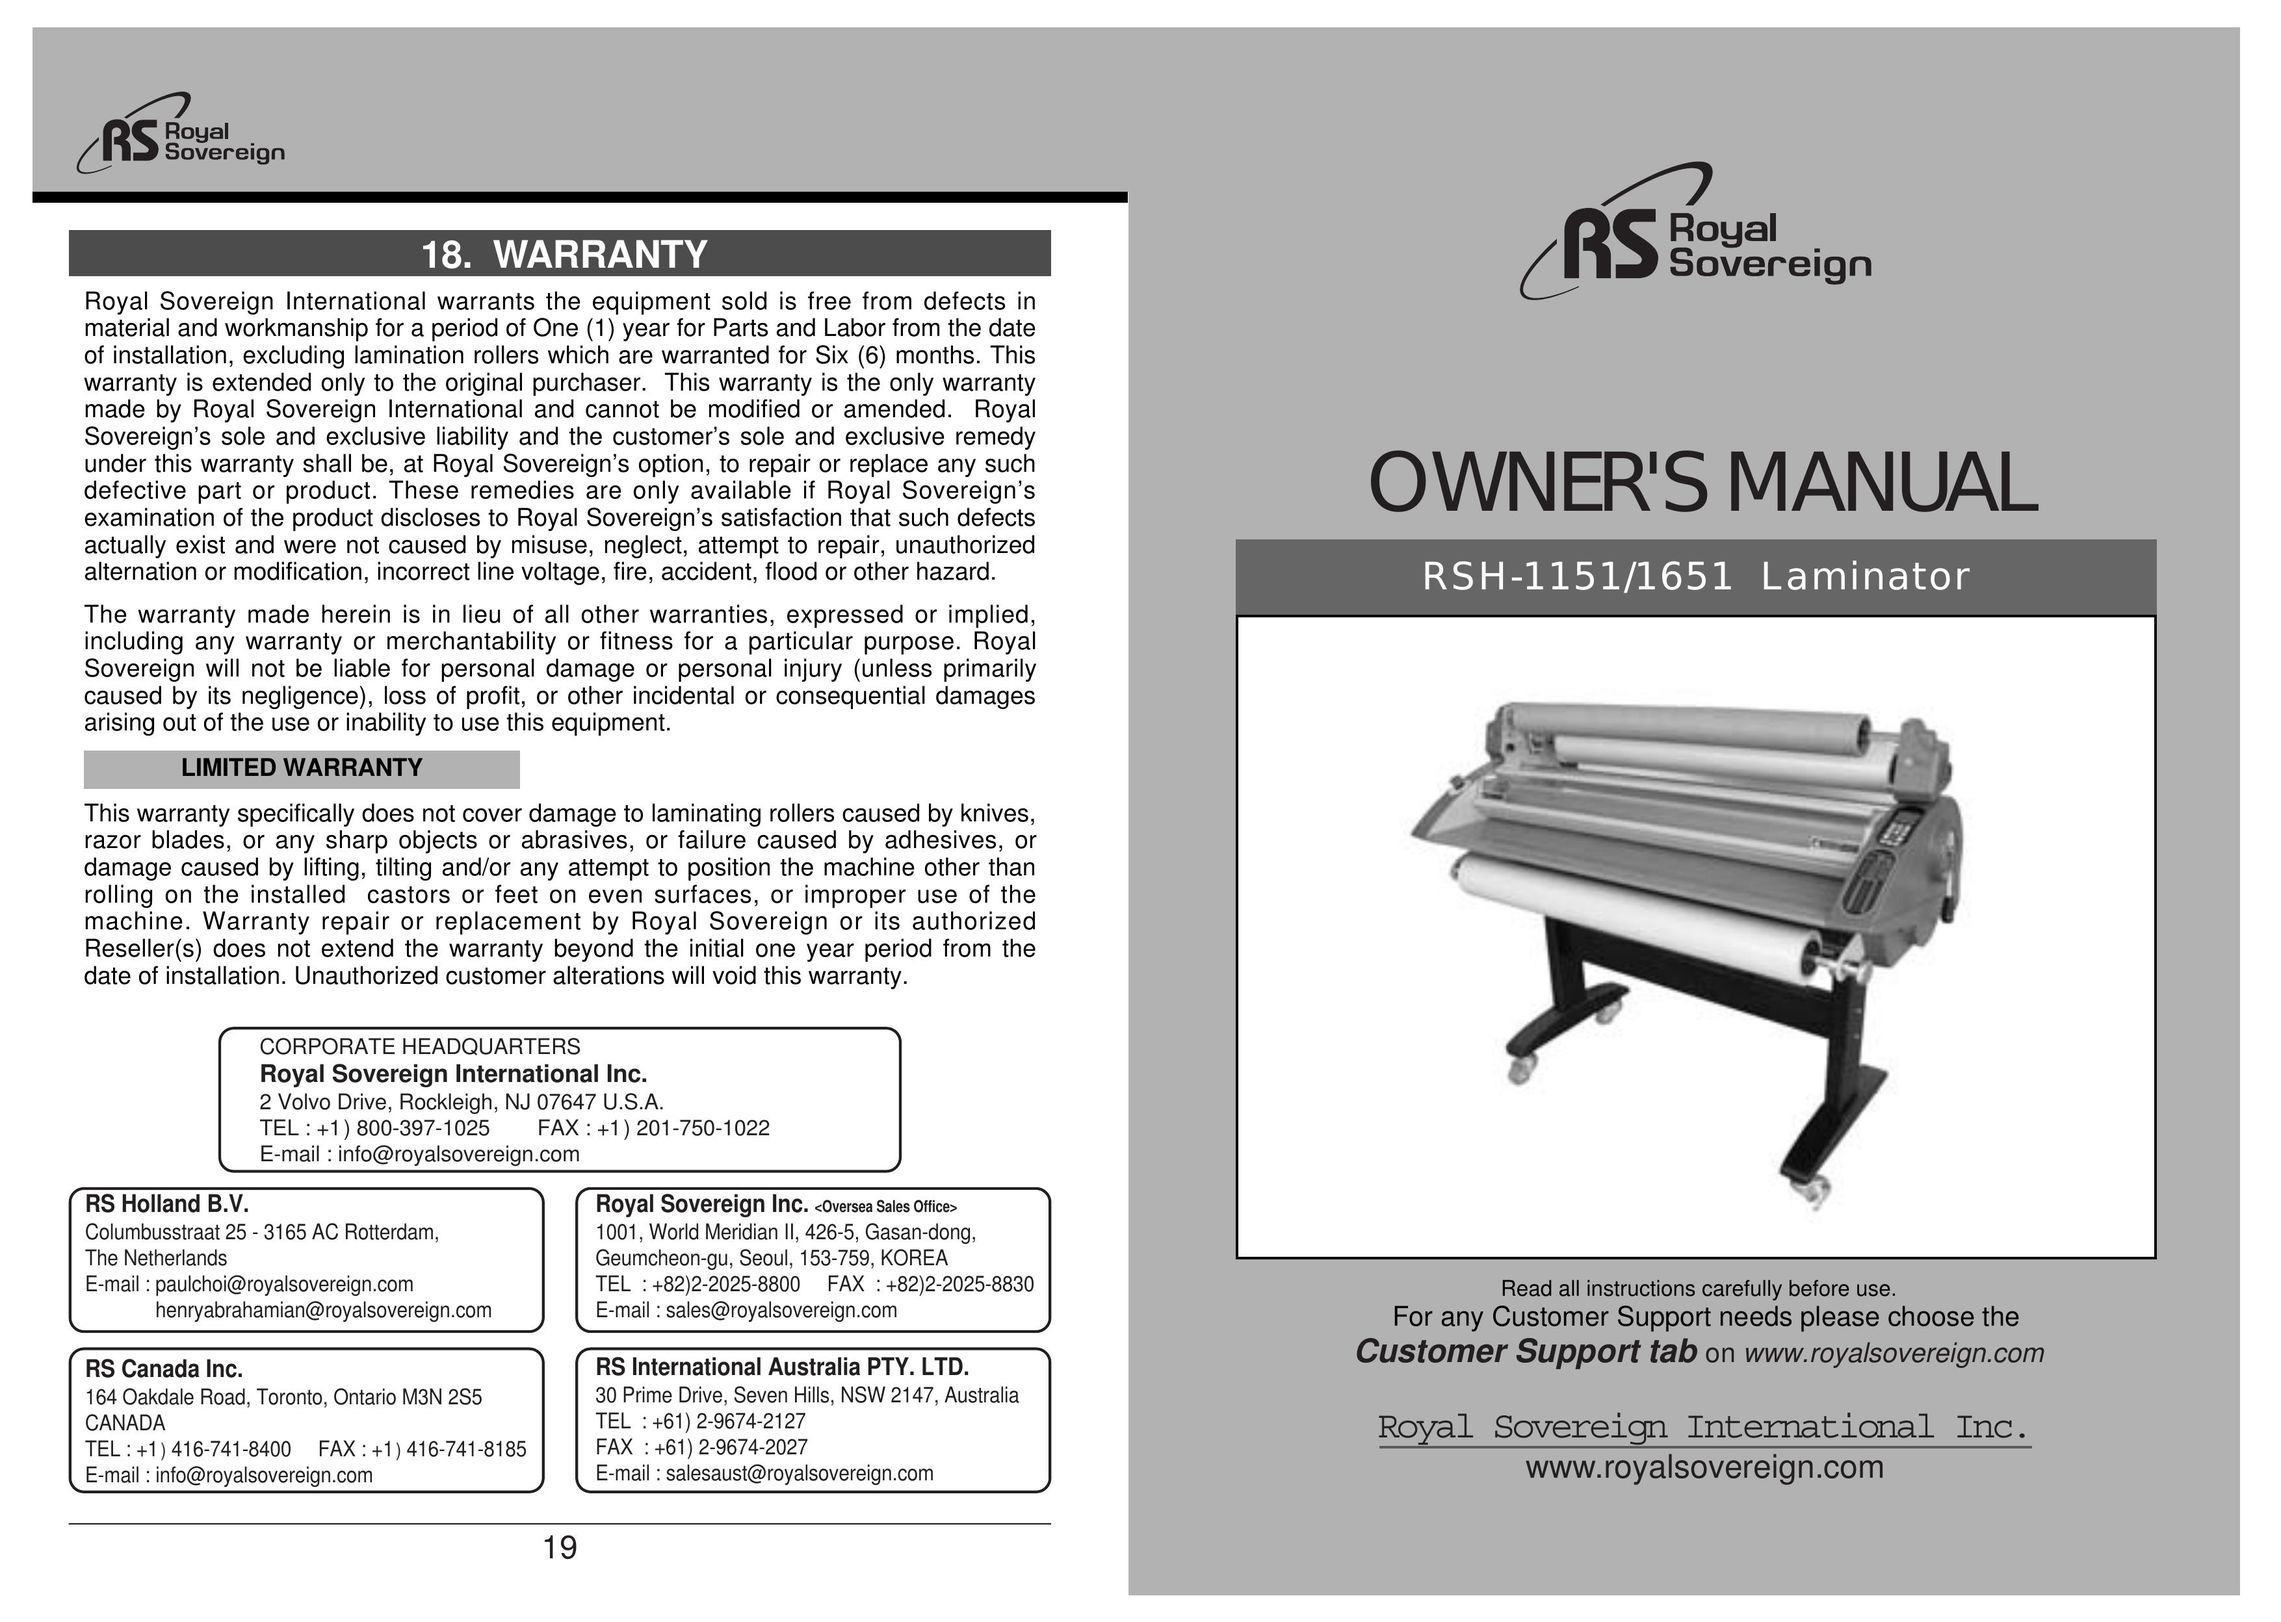 Royal Sovereign RSH-1651 Laminator User Manual